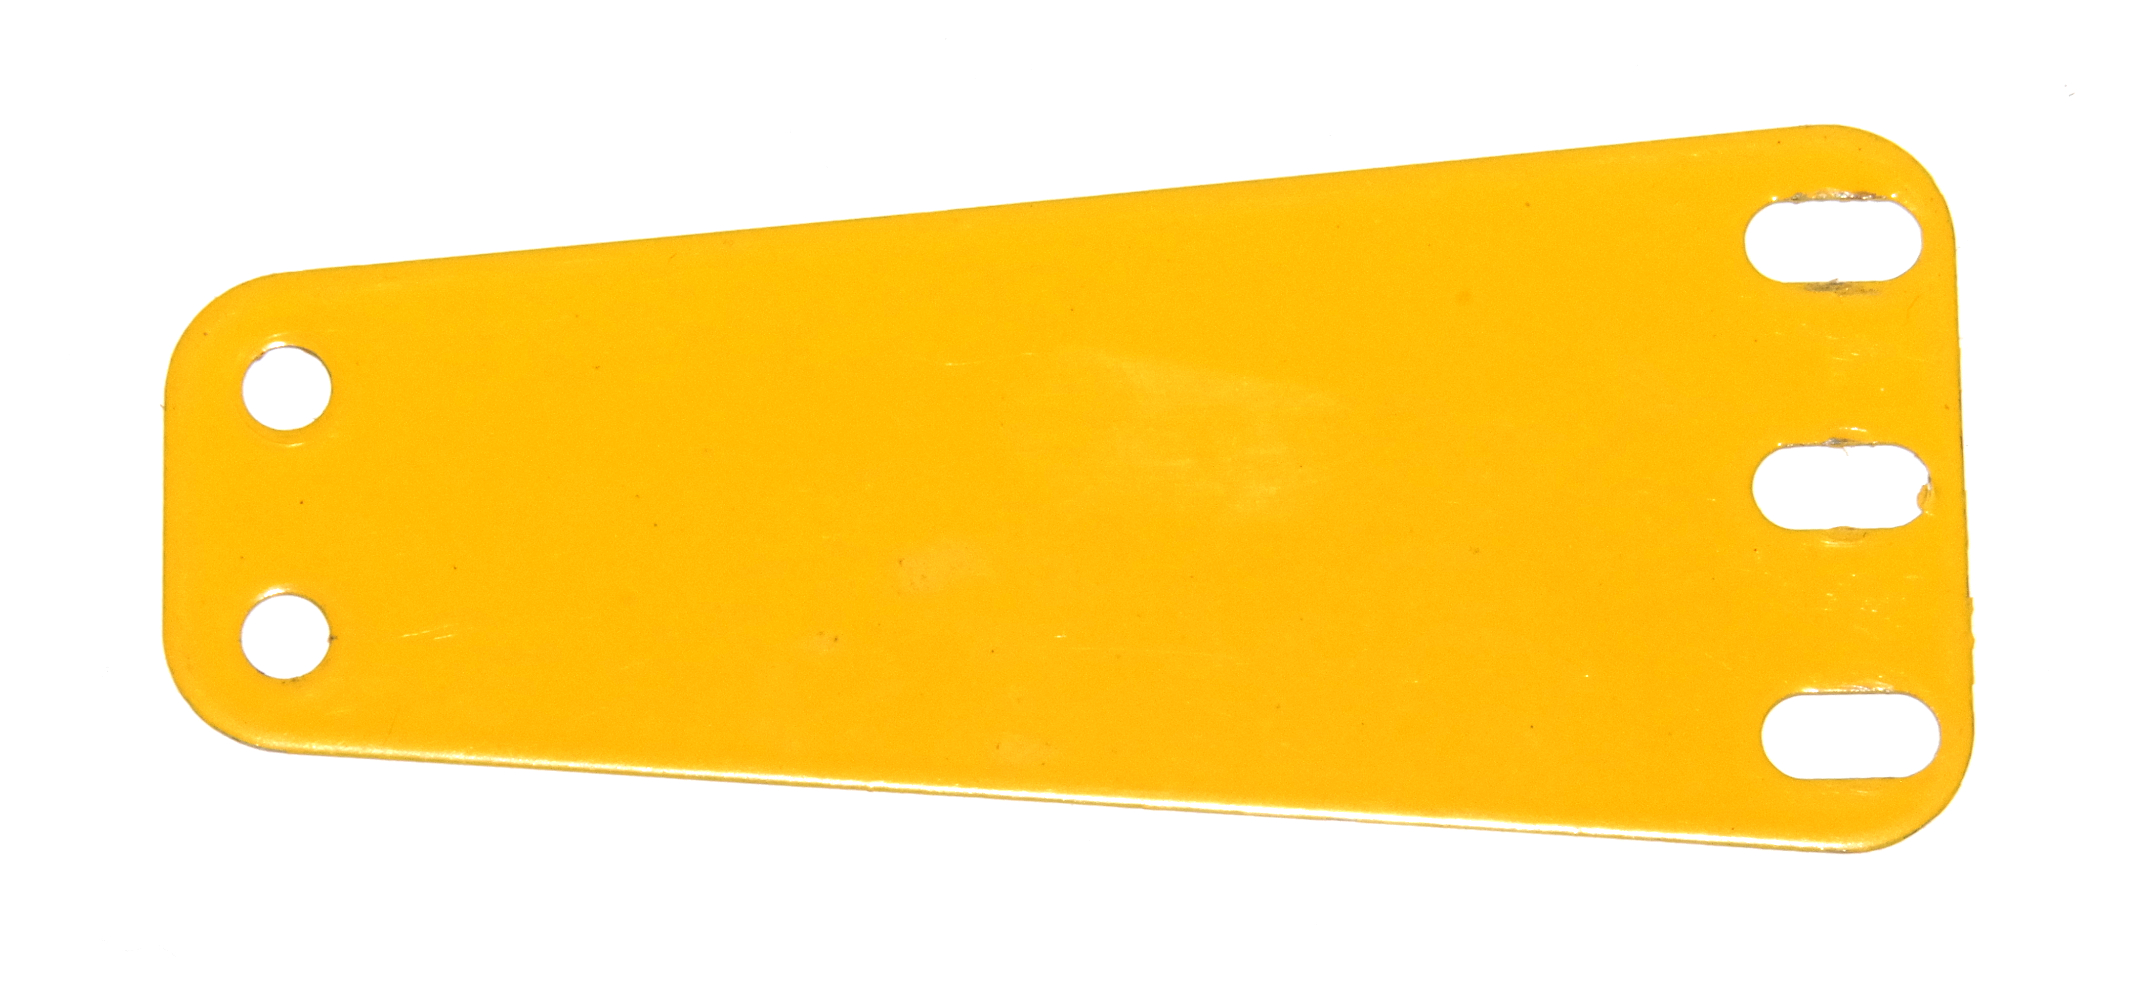 B582 Isosceles Trapezoidal Flexible Plate Yellow Original